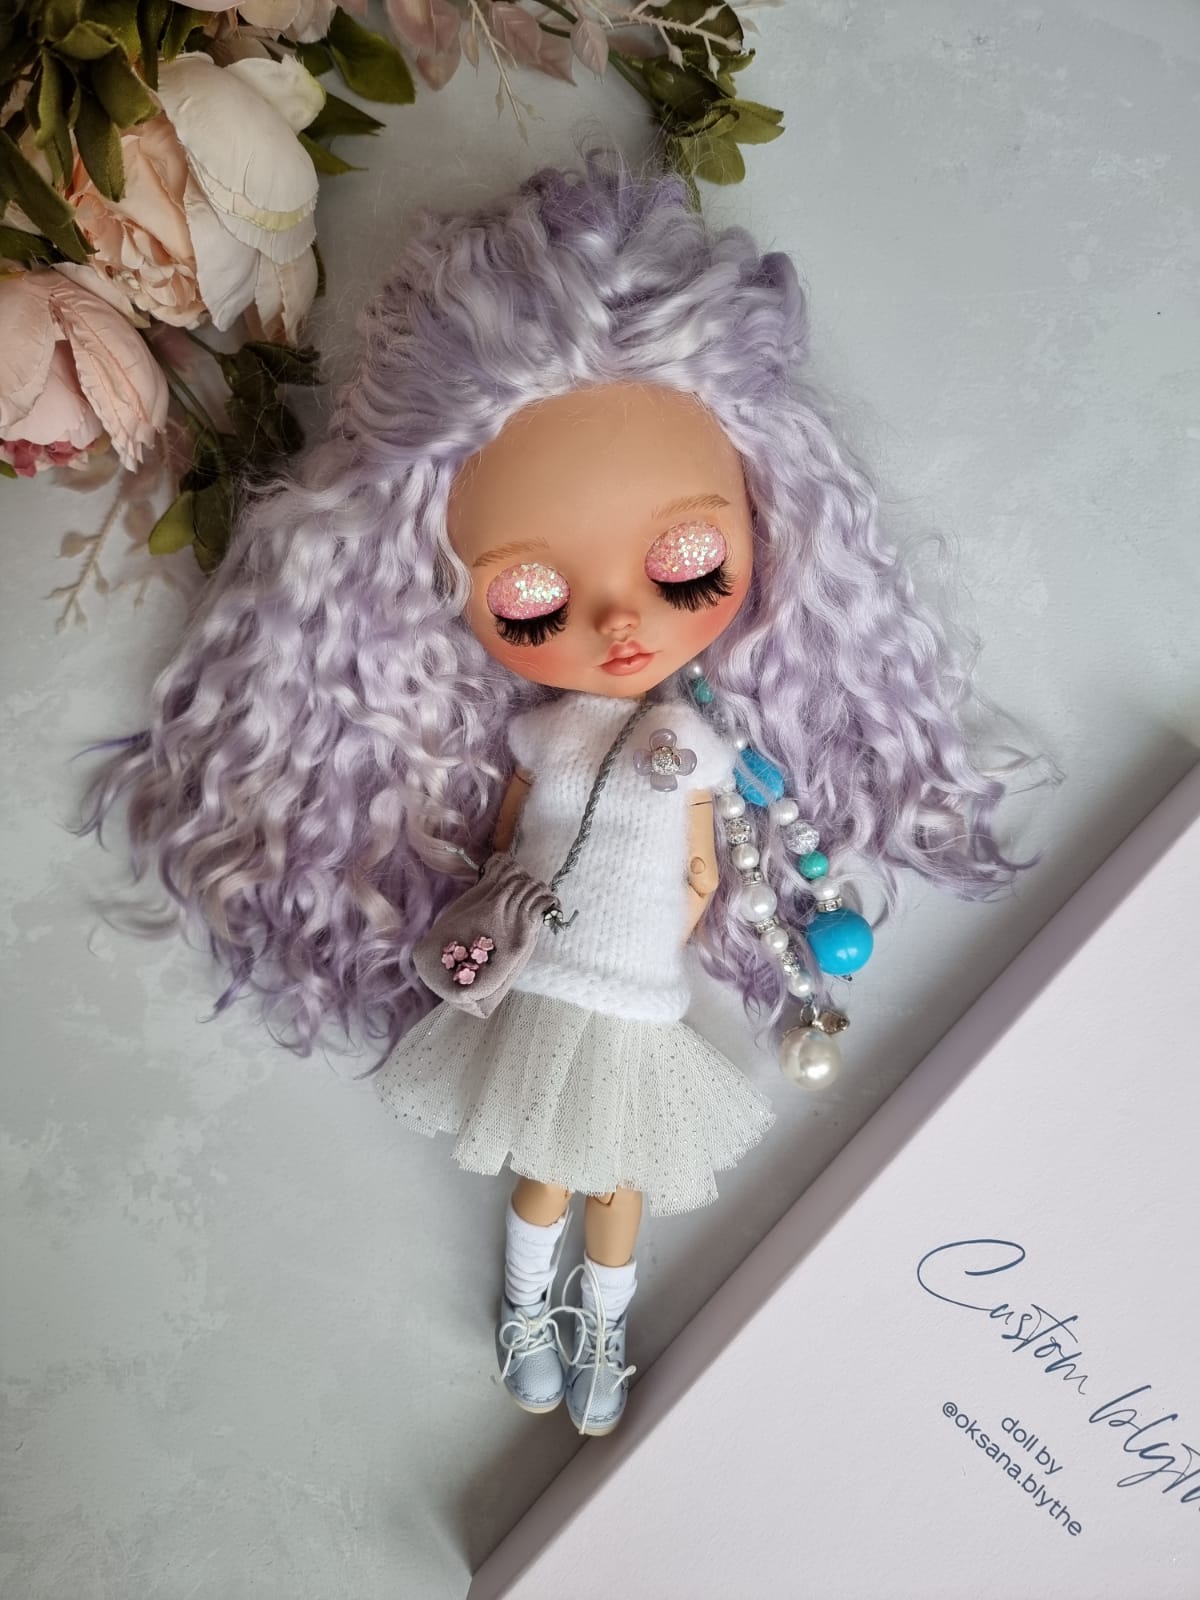 Blythe custom doll gentle 1 copy for sale by Author @Oksana.blythe